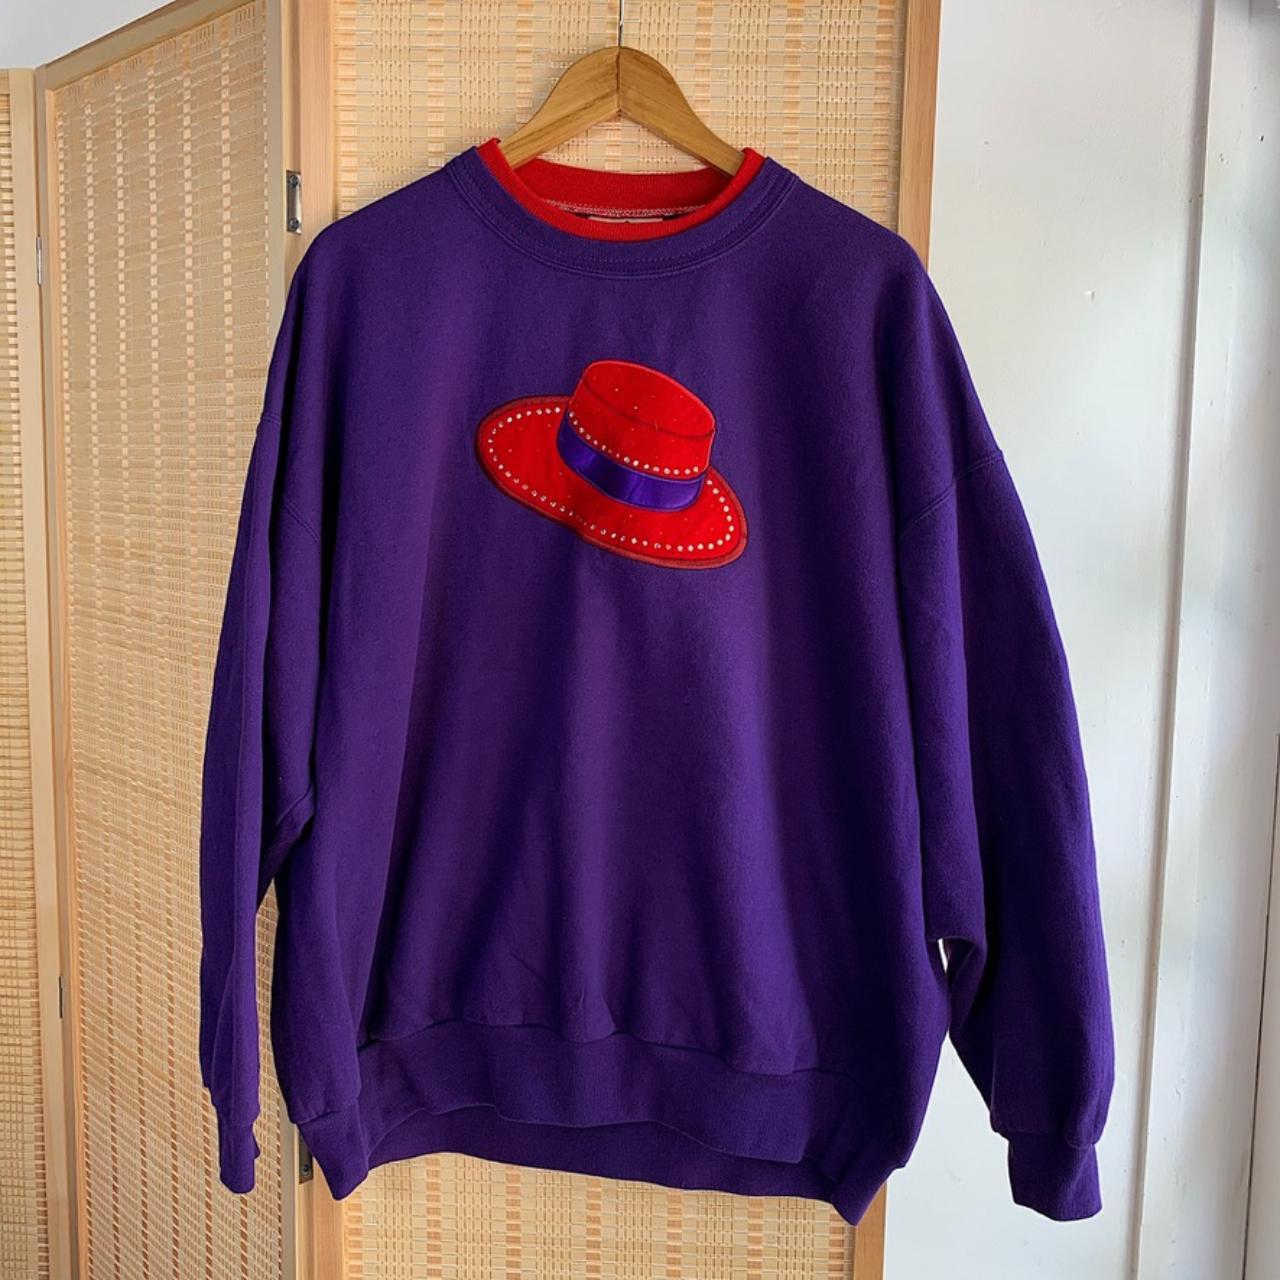 Top Stitch Men's Purple and Red Sweatshirt